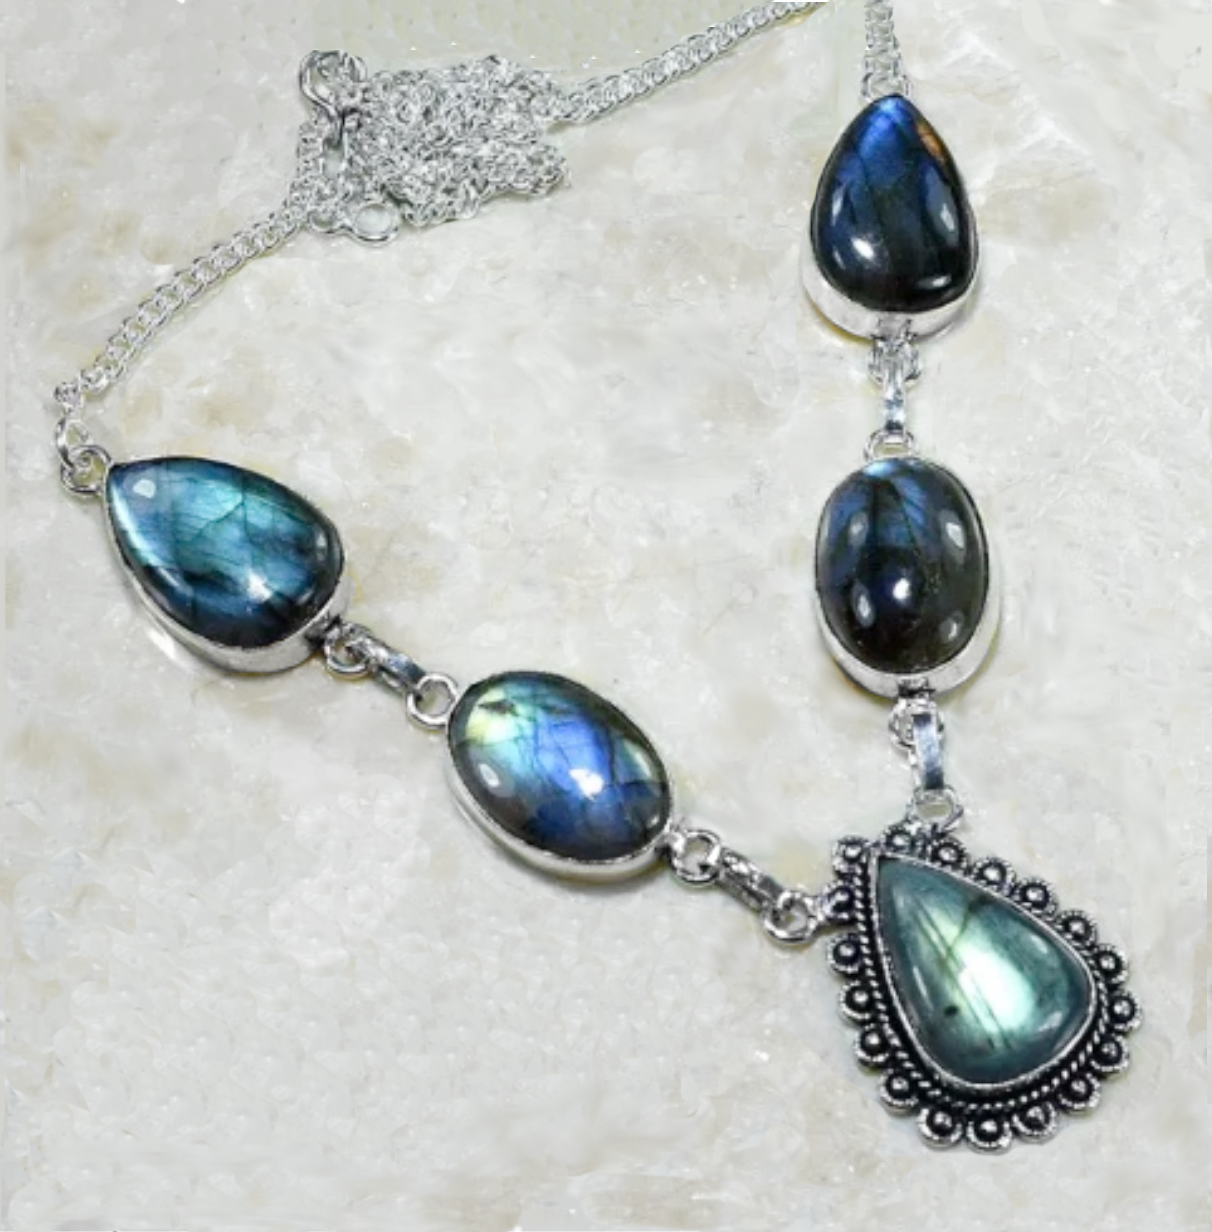 Natural Blue Fire Labradorite Gemstone 925 Silver Necklace